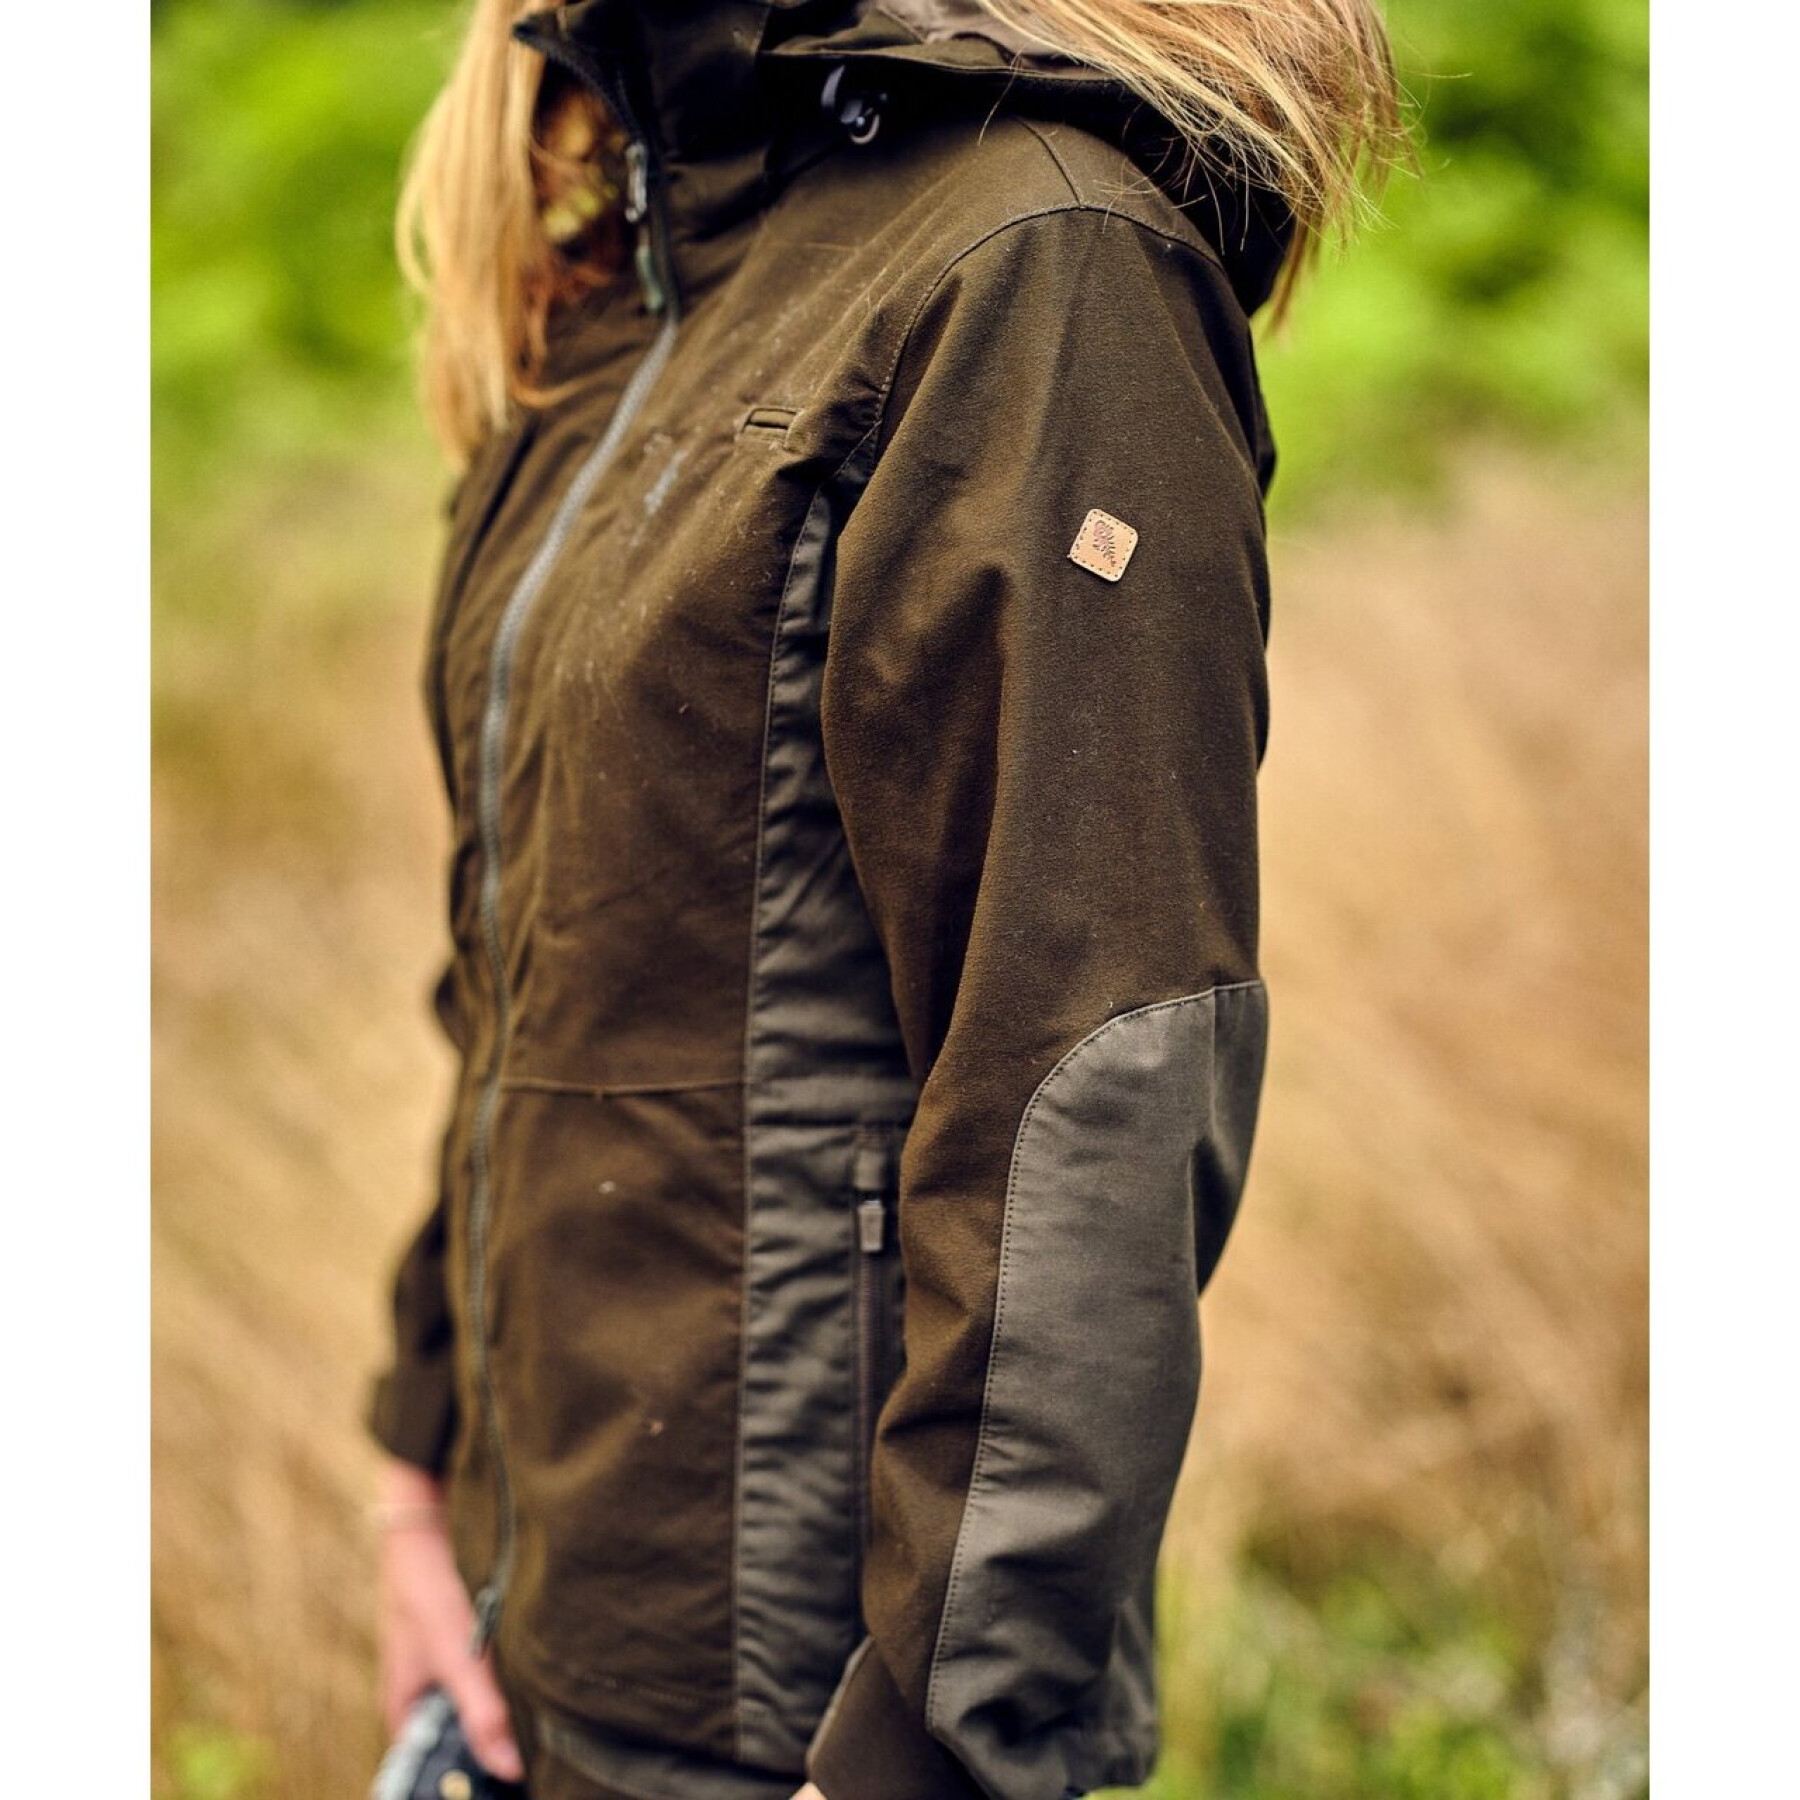 Women's waterproof jacket Pinewood Furudal